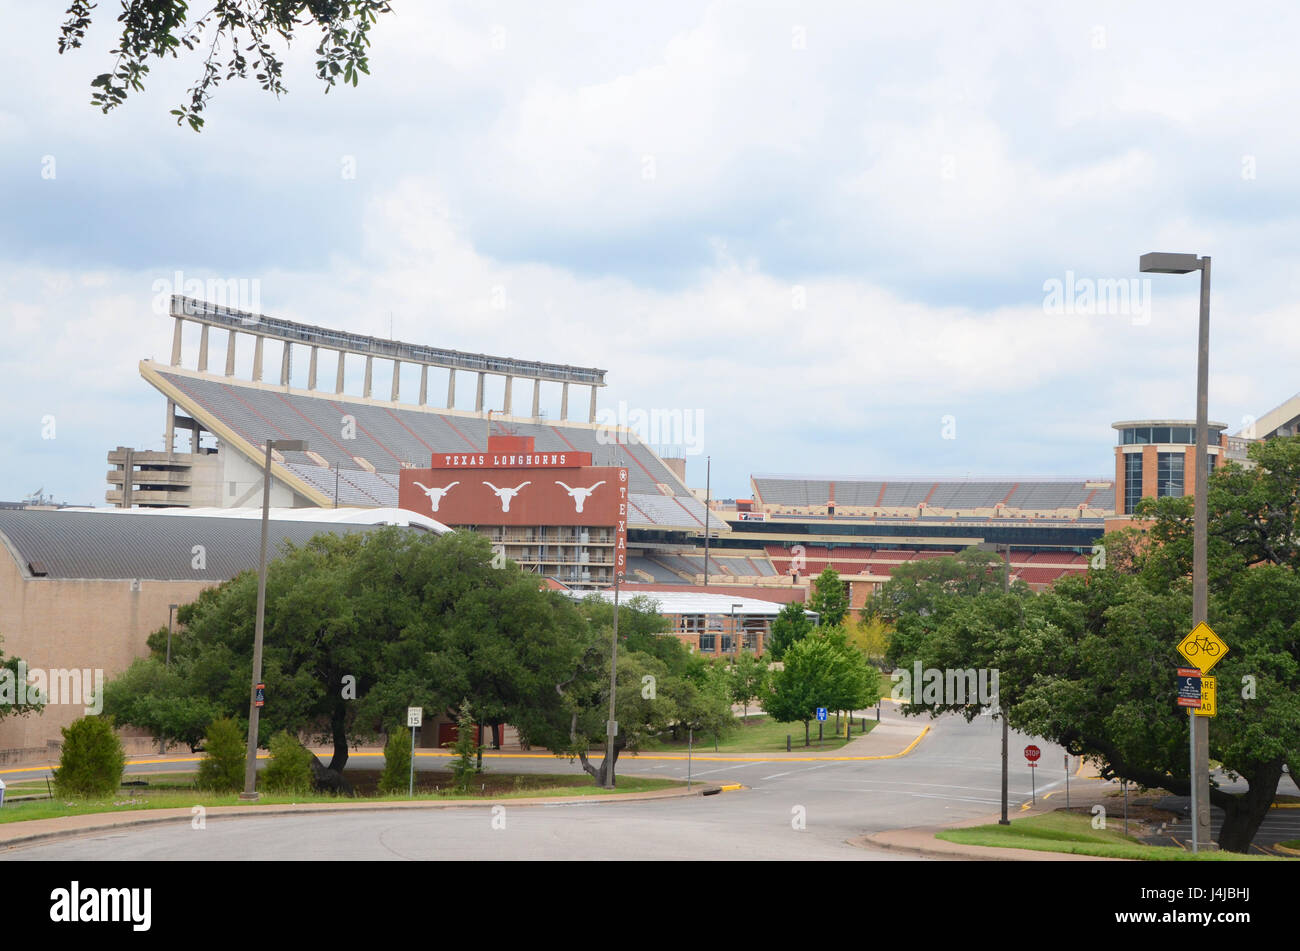 the texas longhorns football stadium on a non game day Stock Photo